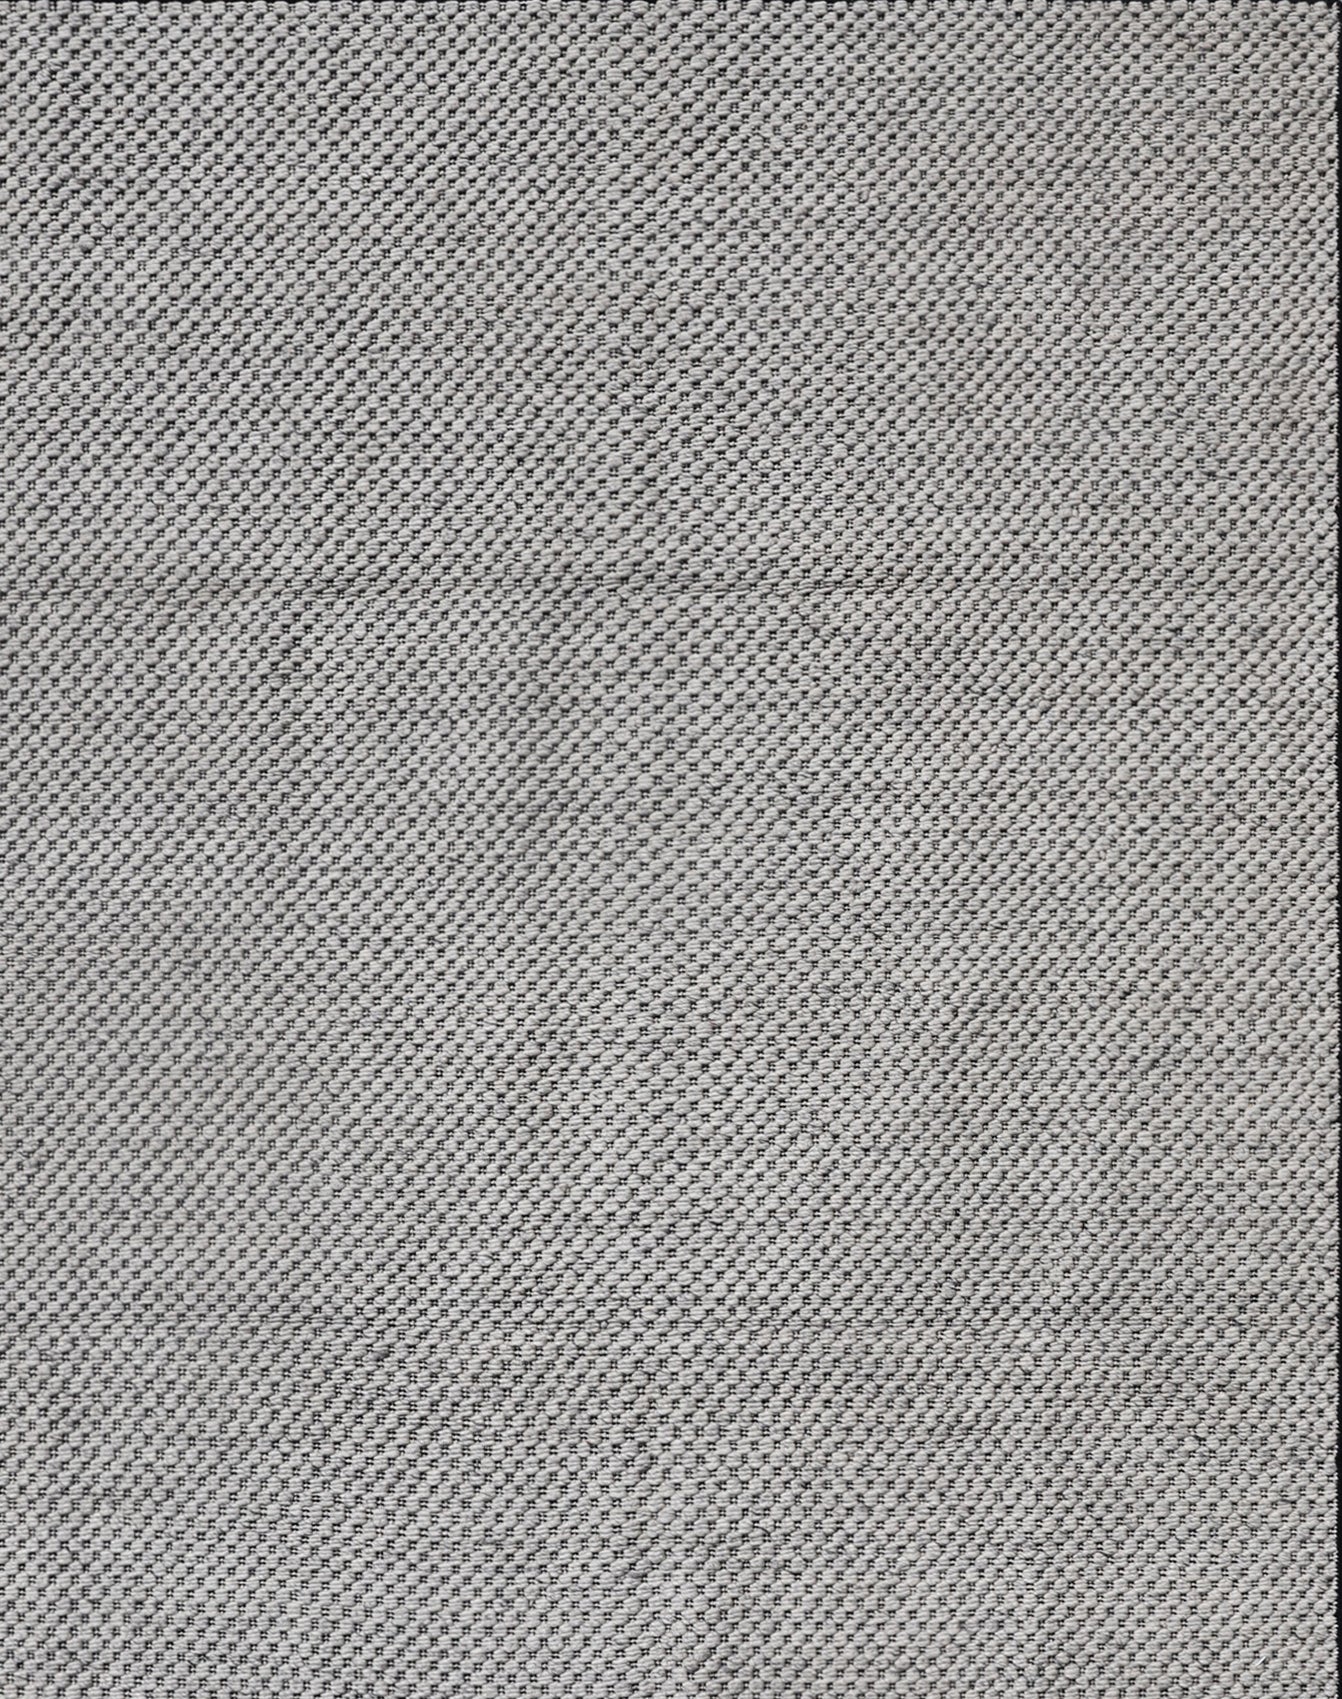 9'x12' Ivory Grey Contemporary Indian Kilim